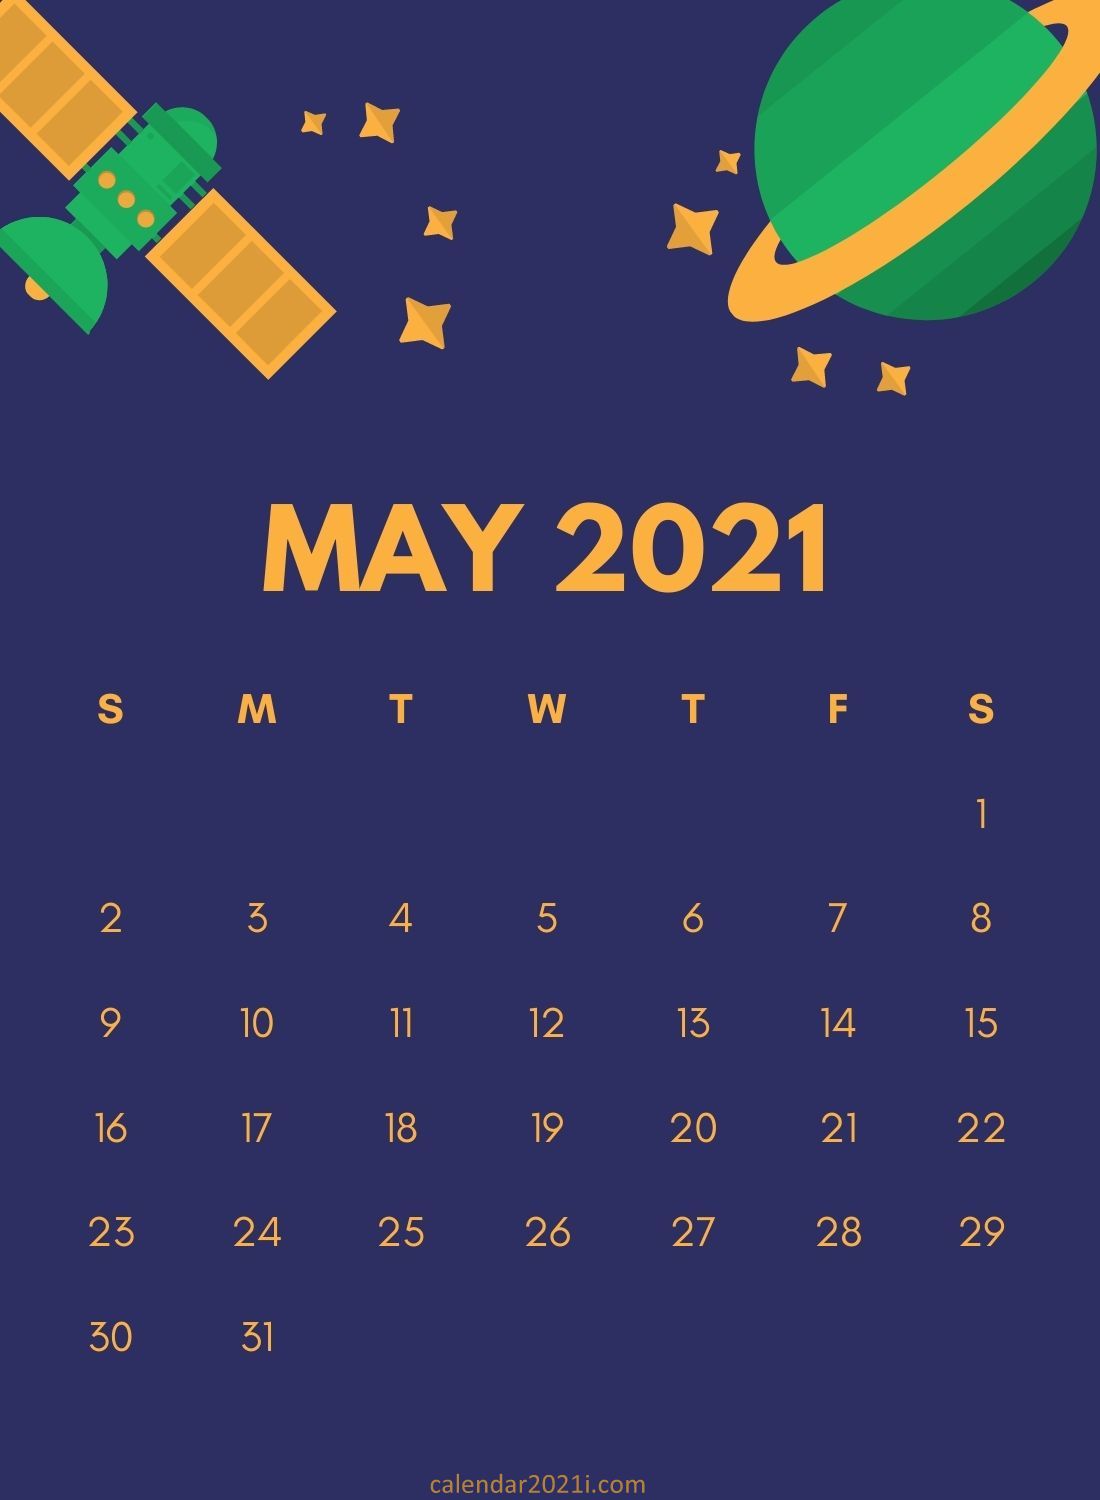 May 2021 Wall Calendar Printable